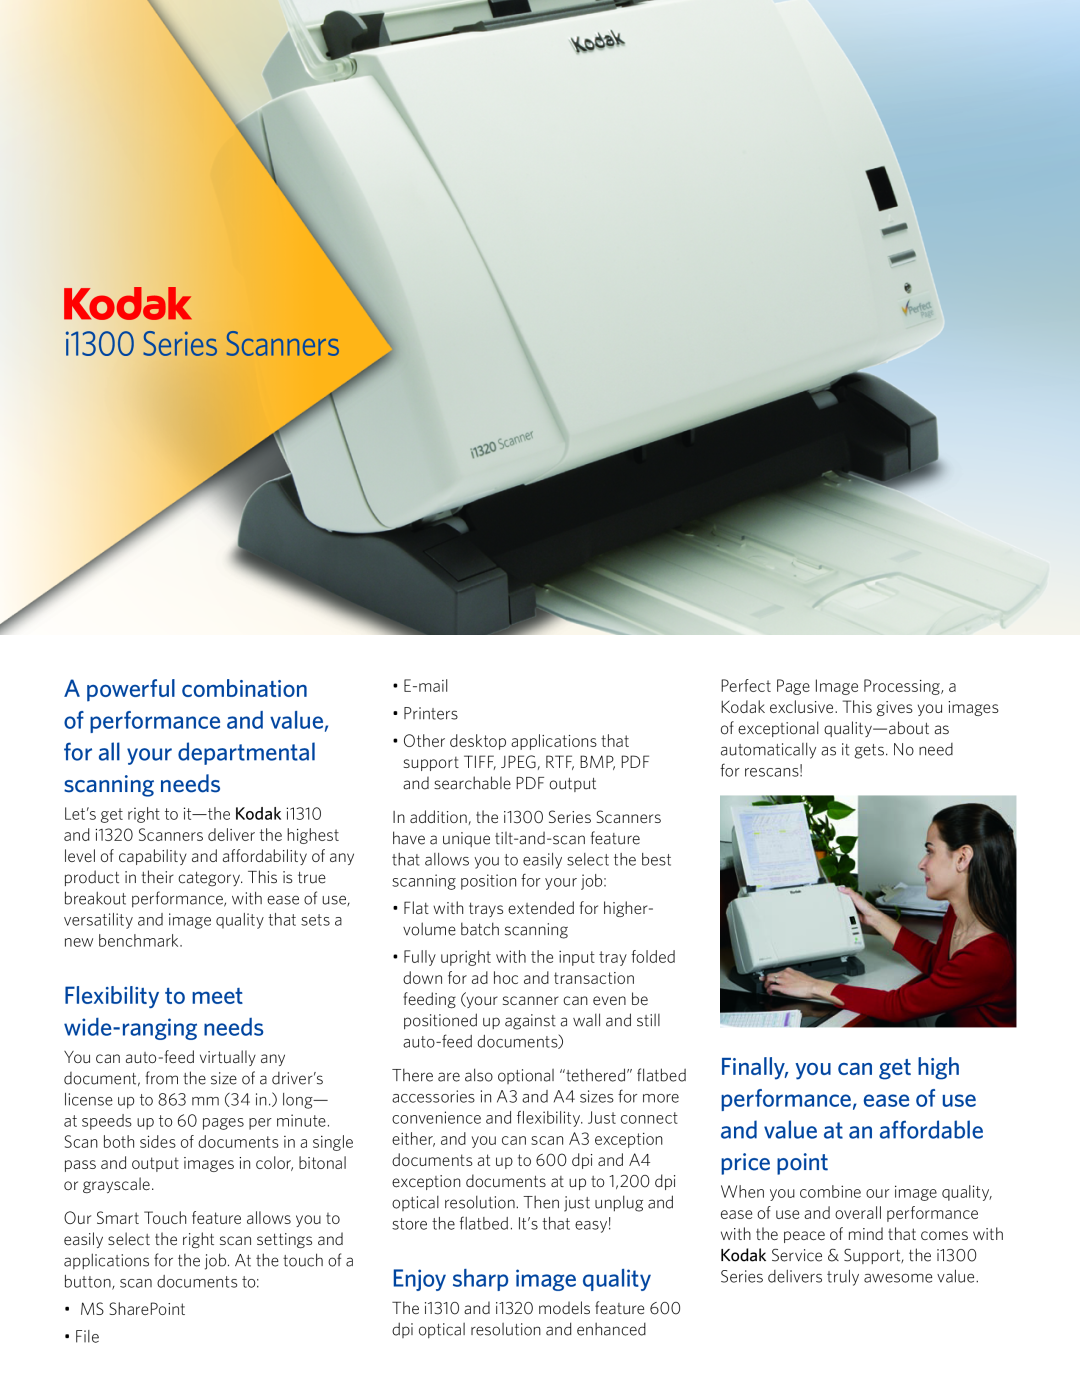 Kodak i1310, I1320 manual i1300 Series Scanners, Enjoy sharp image quality, Flexibility to meet wide-ranging needs 